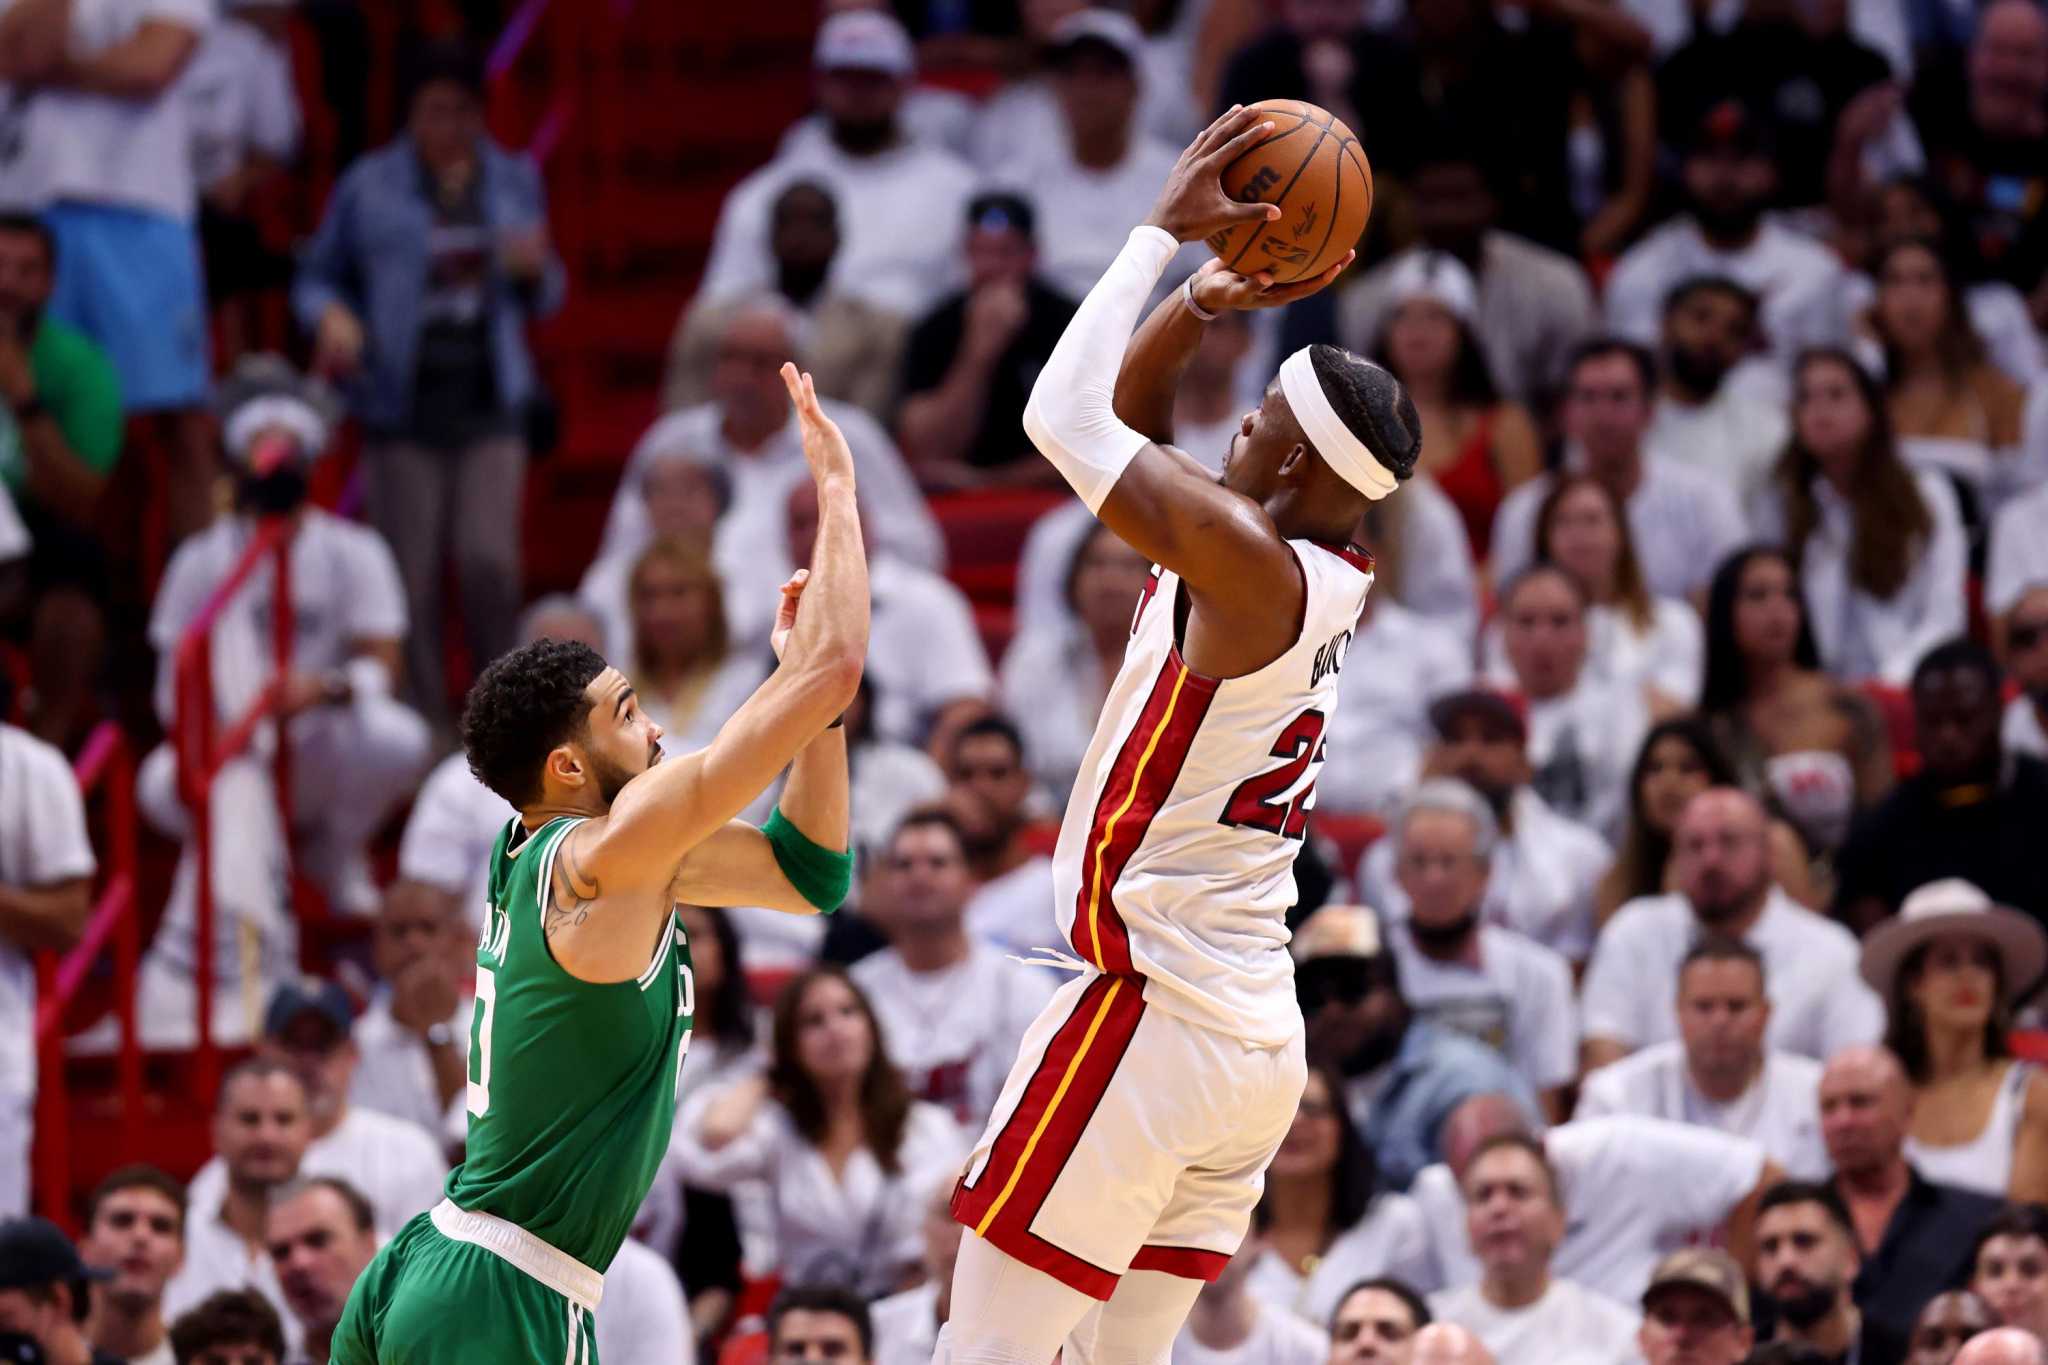 Heat upset about play Celtics' Payton Pritchard made on Jimmy Butler